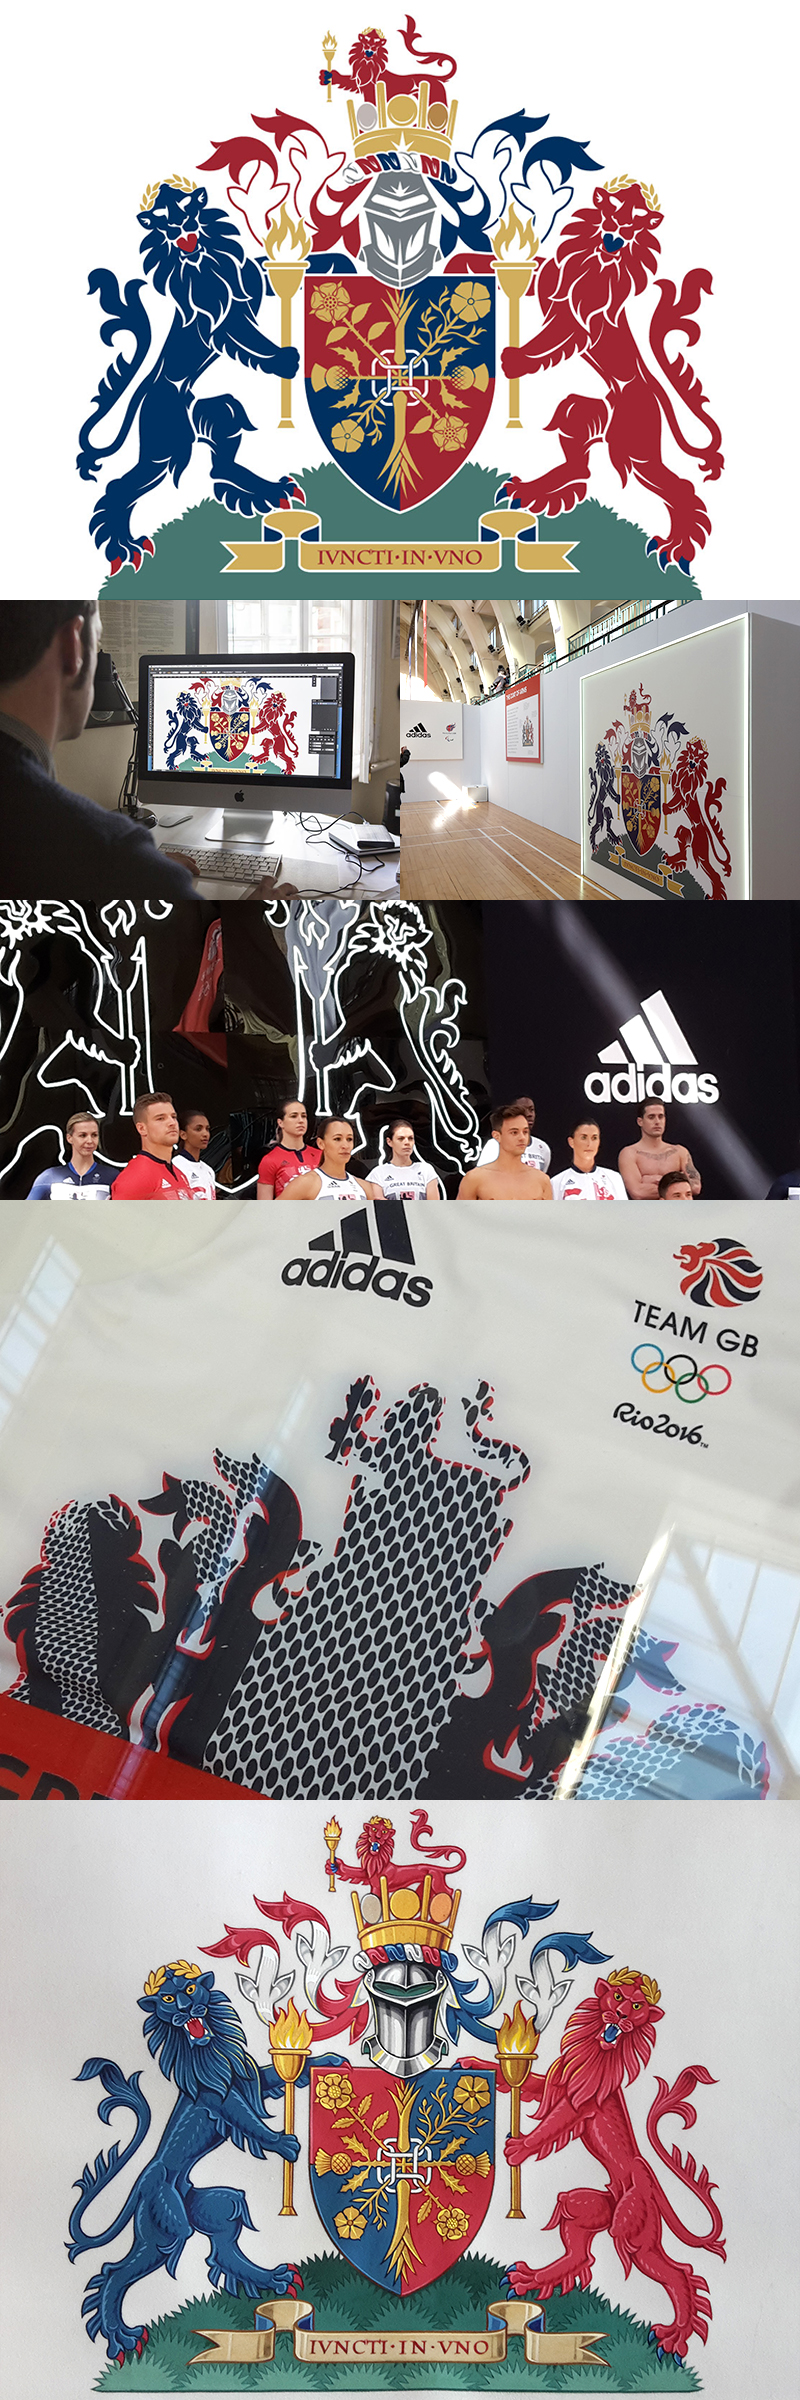 Digital heraldry design for the Team GB kit for the Rio 2016 Olympics